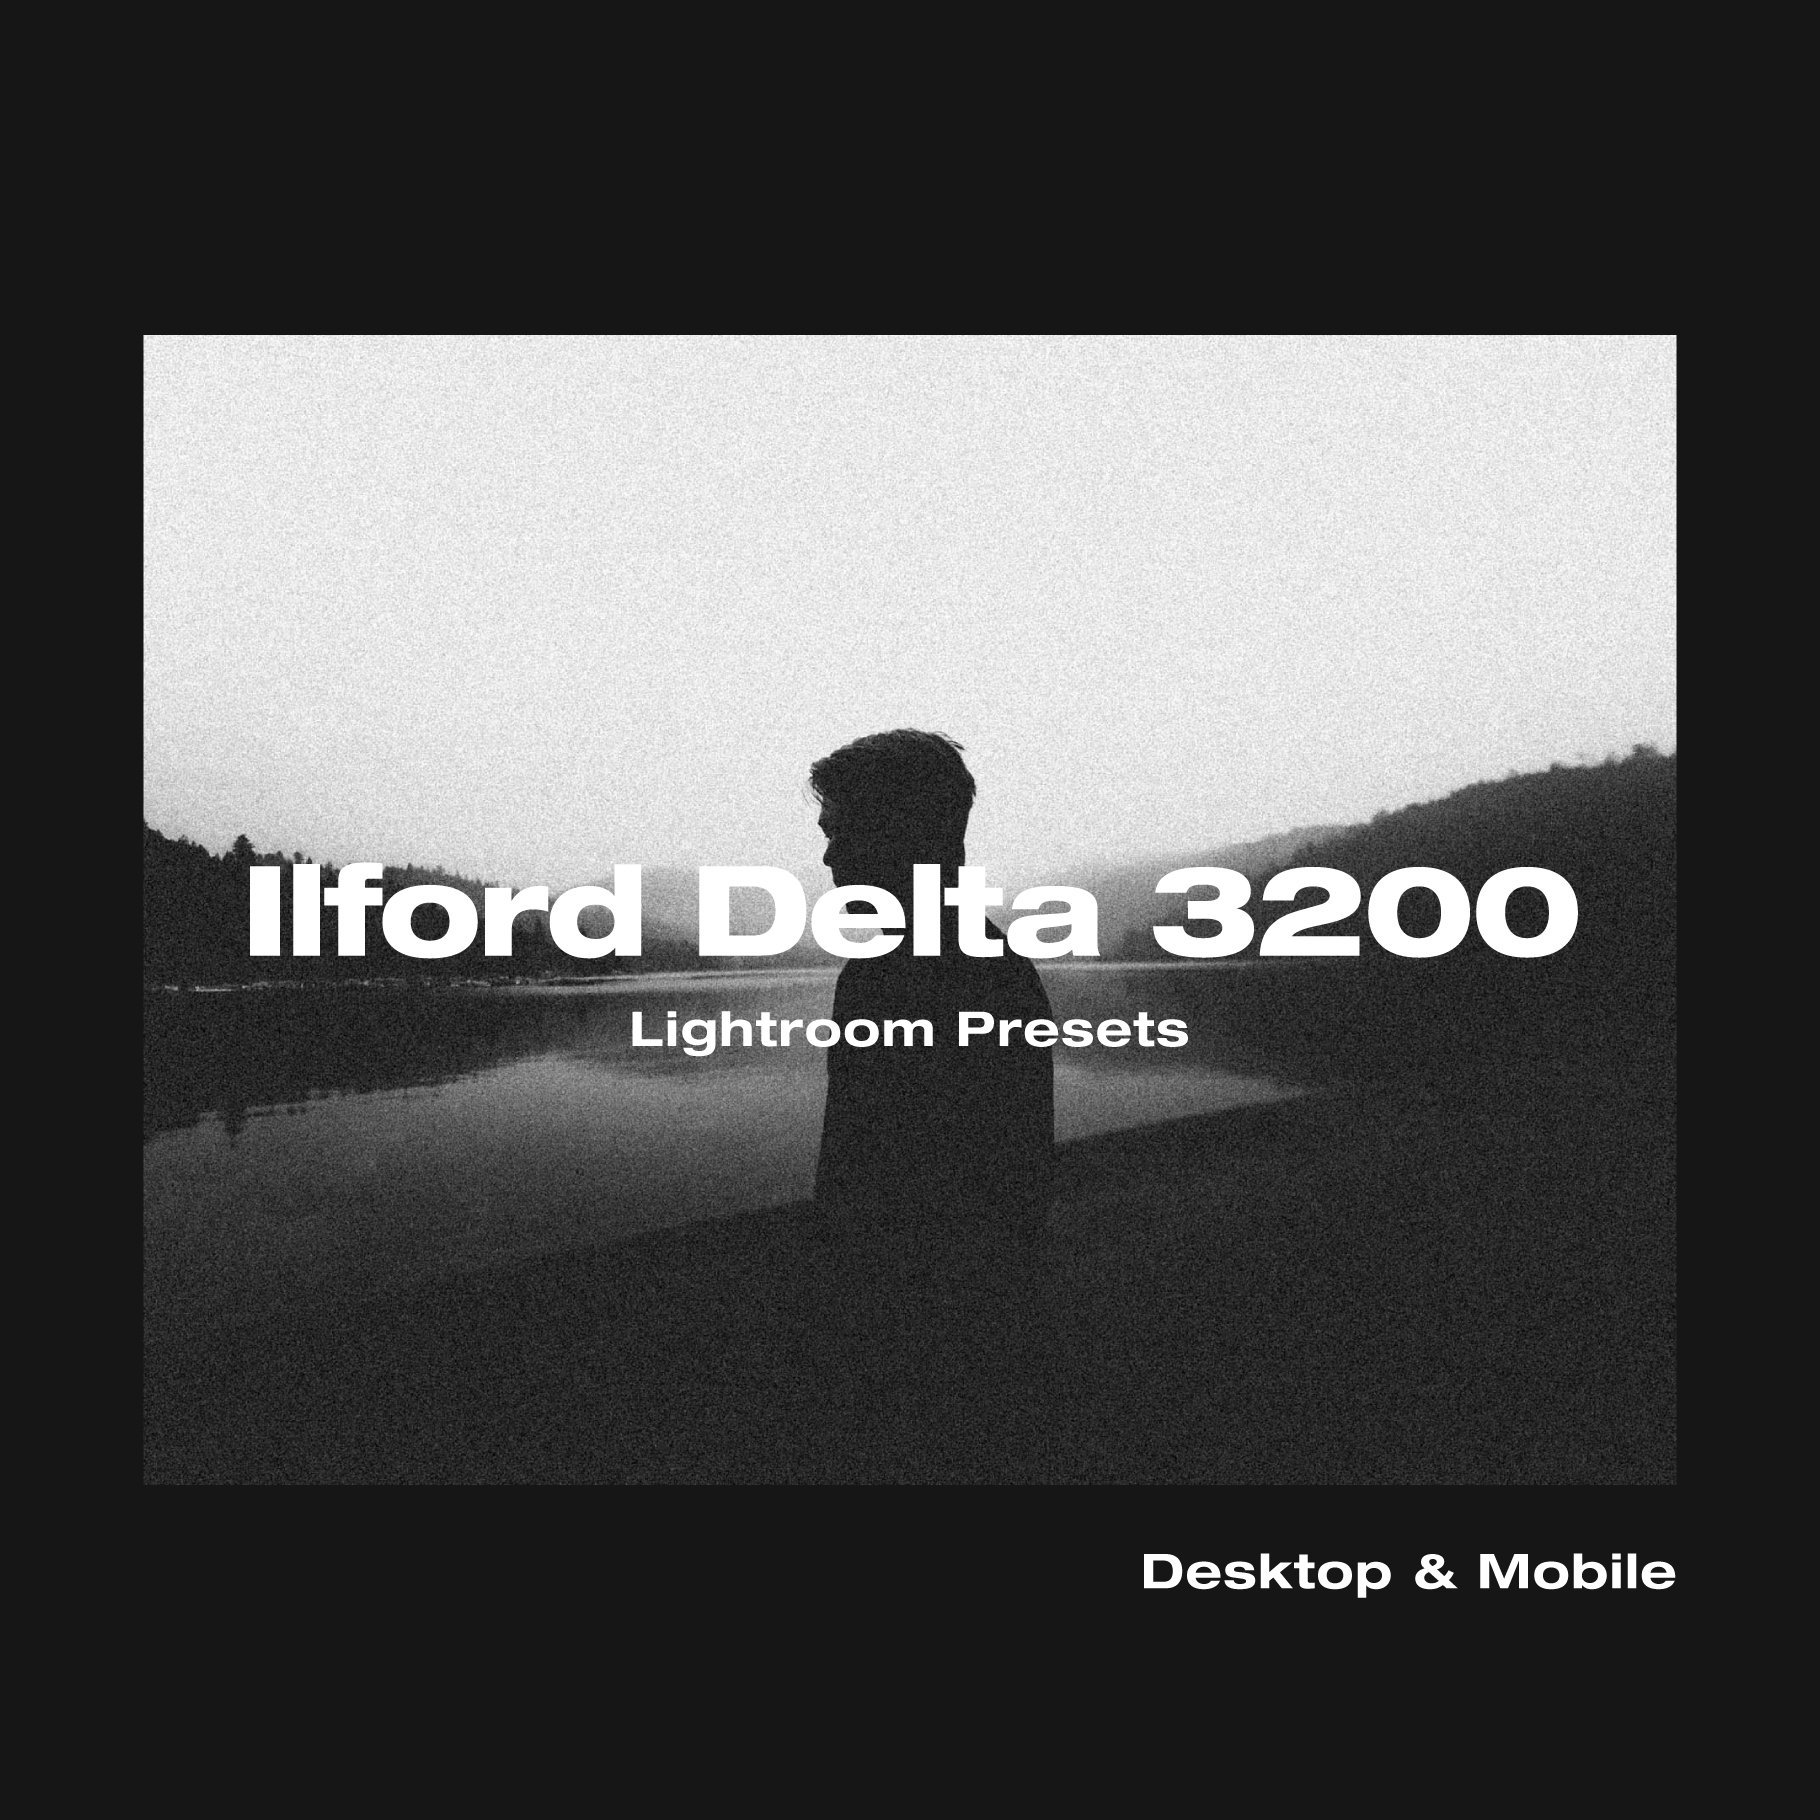 Ilford Delta 3200 Lightroom Presetscover image.